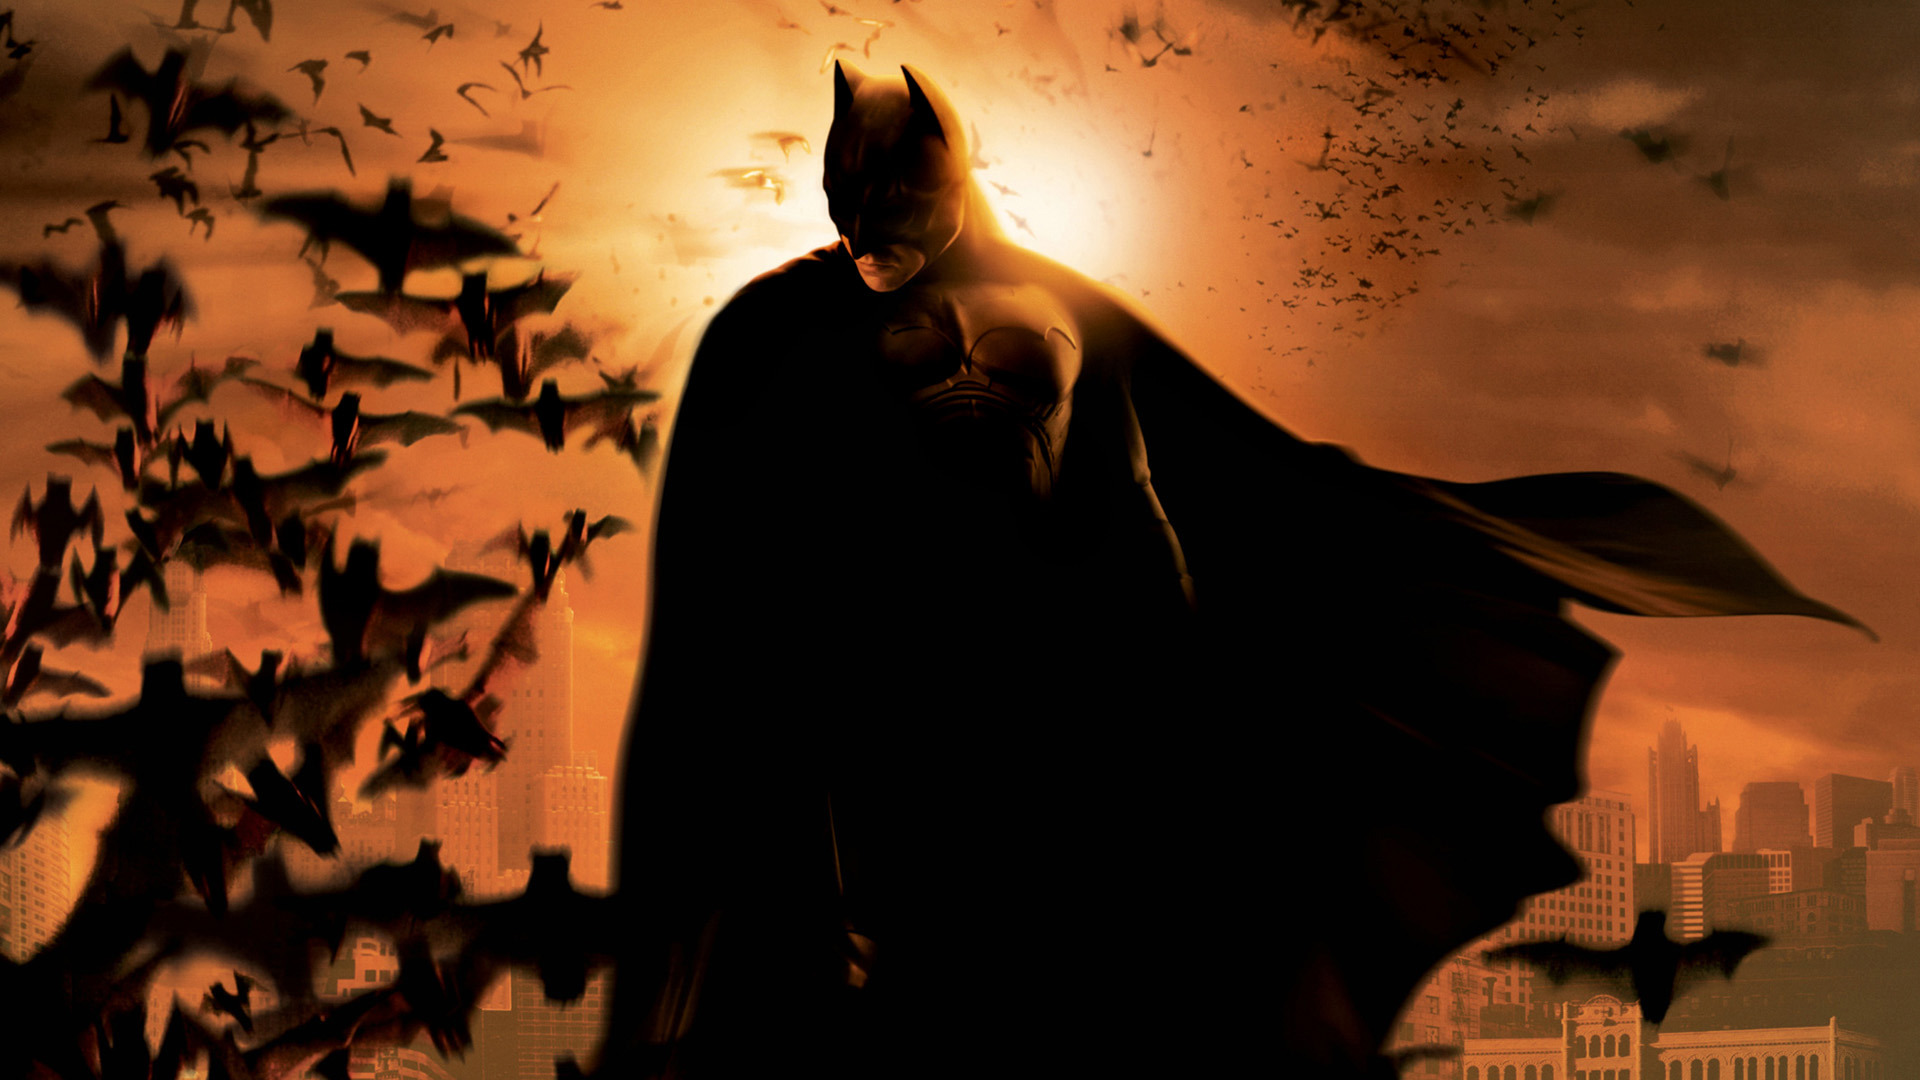 Batman HD Wallpaper For Mobile And Desktop One Punch Man